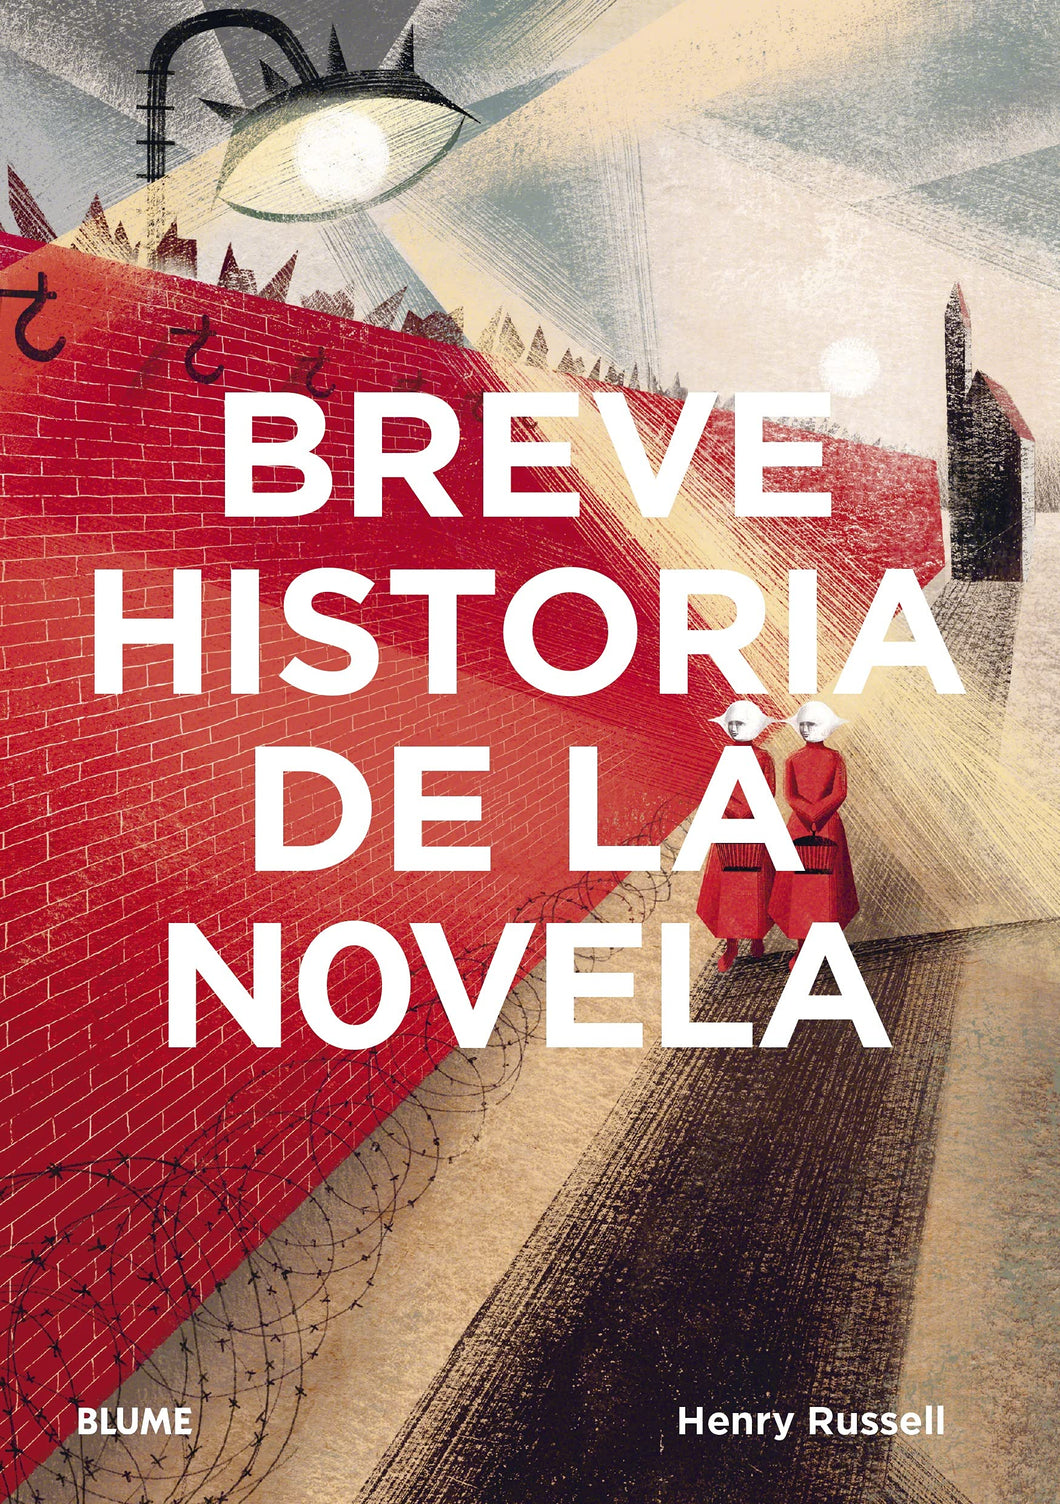 BREVE HISTORIA DE LA NOVELA - Henry Russell. Peter Boxall